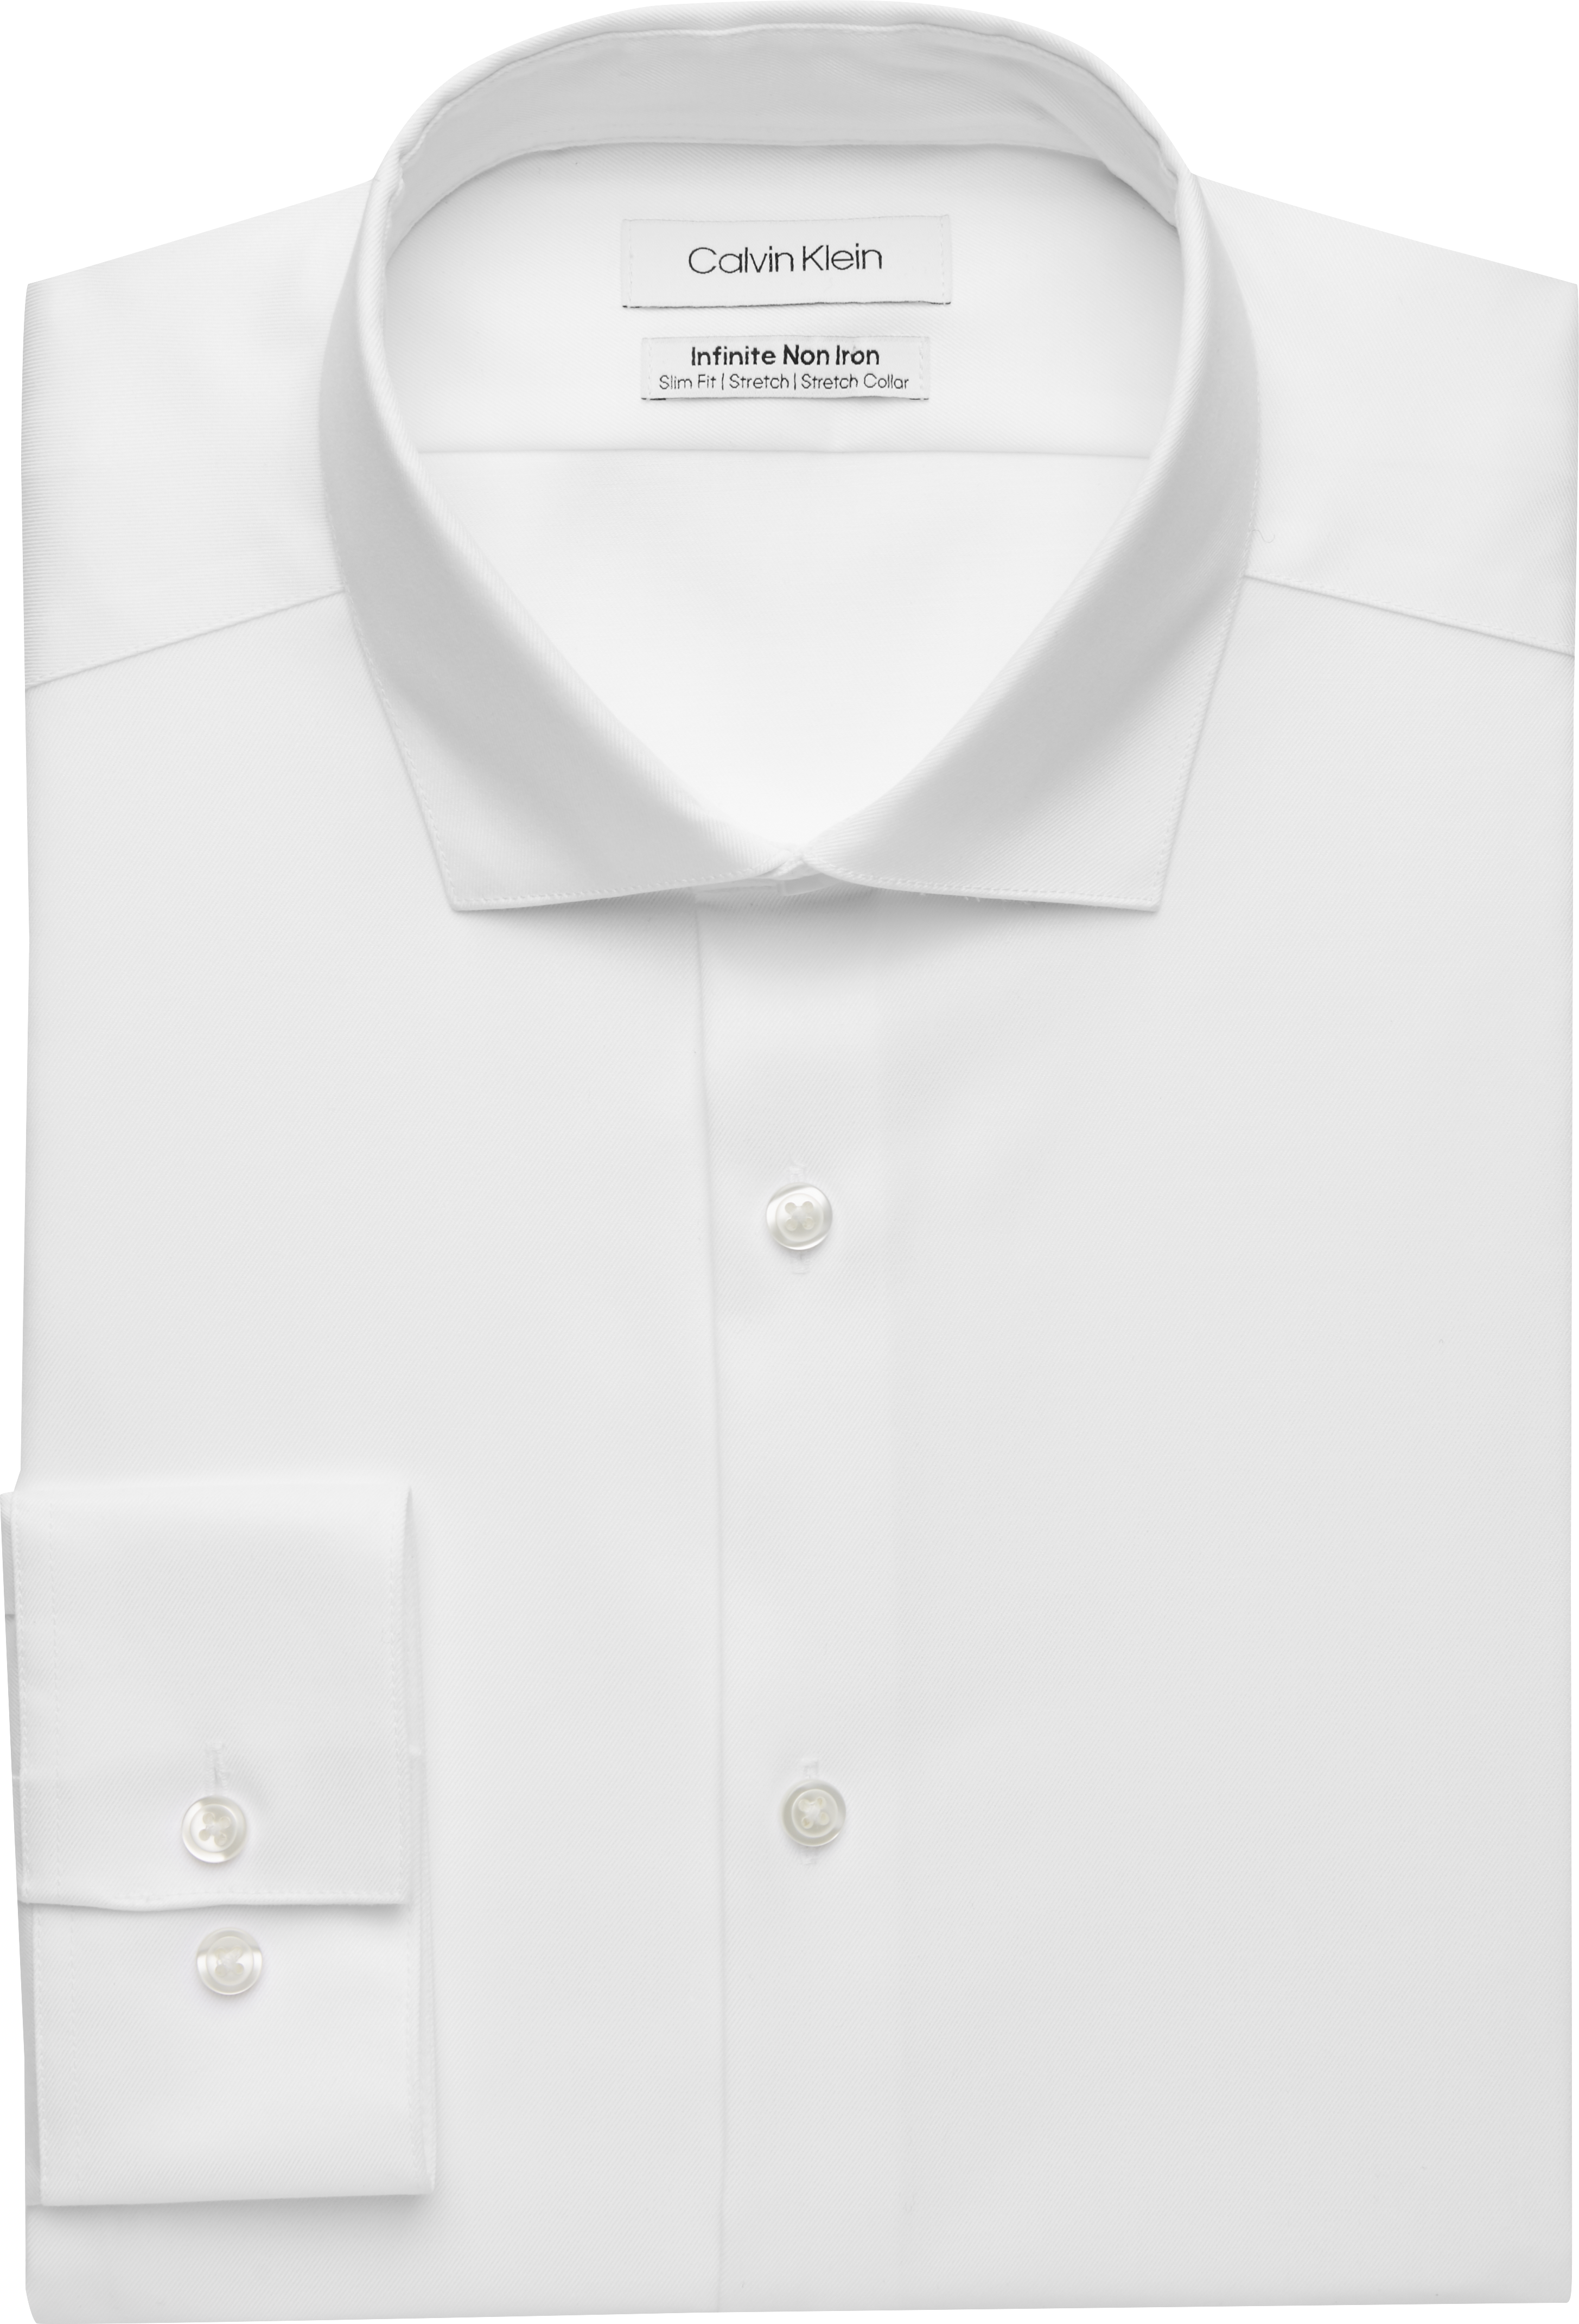 stretch white dress shirt